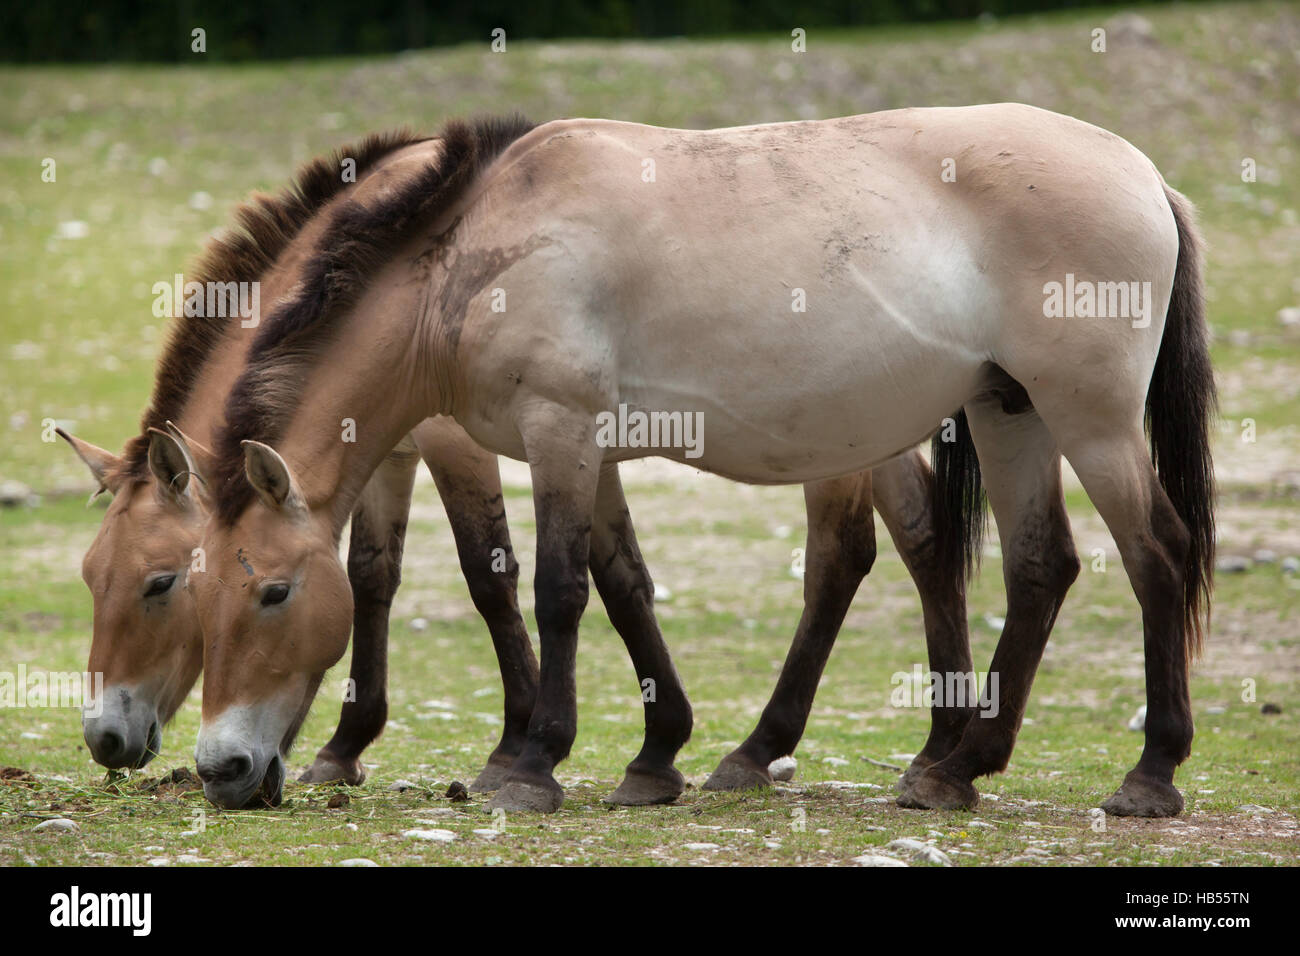 Przewalski's horse (Equus ferus przewalskii), also known as the Asian wild horse. Stock Photo